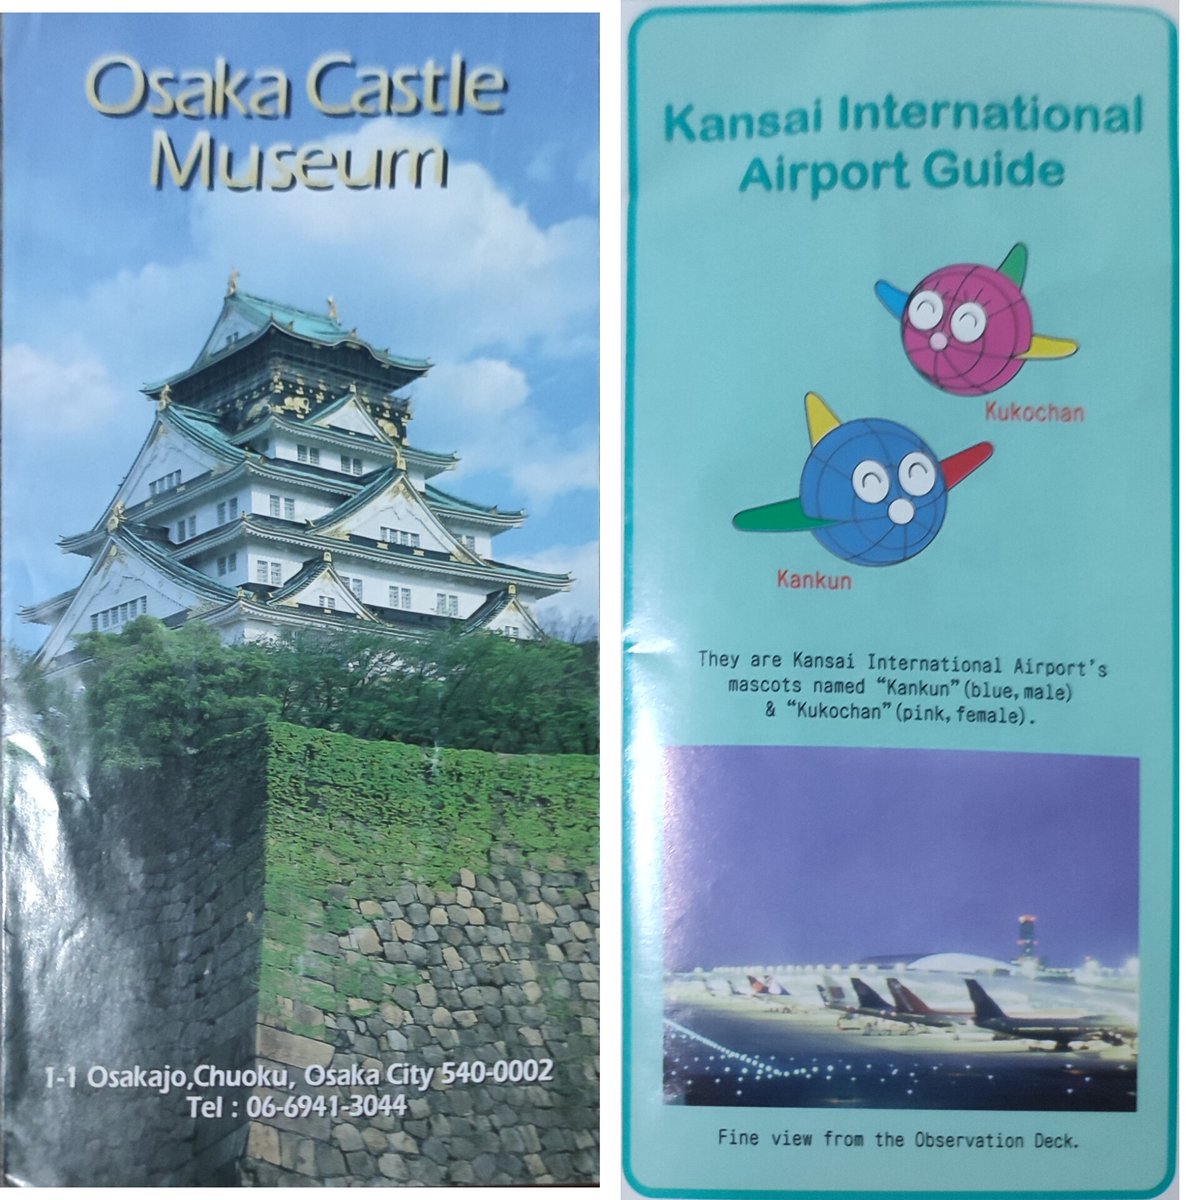 Last night, my mum showed and gave me these on her trip in Osaka Castle and Kansai region last night. I love them!!
#VisitOsaka
#OsakaTravel
#iLoveOsaka
#iLoveJapan
#iLoveKansai
#StopAsianHate